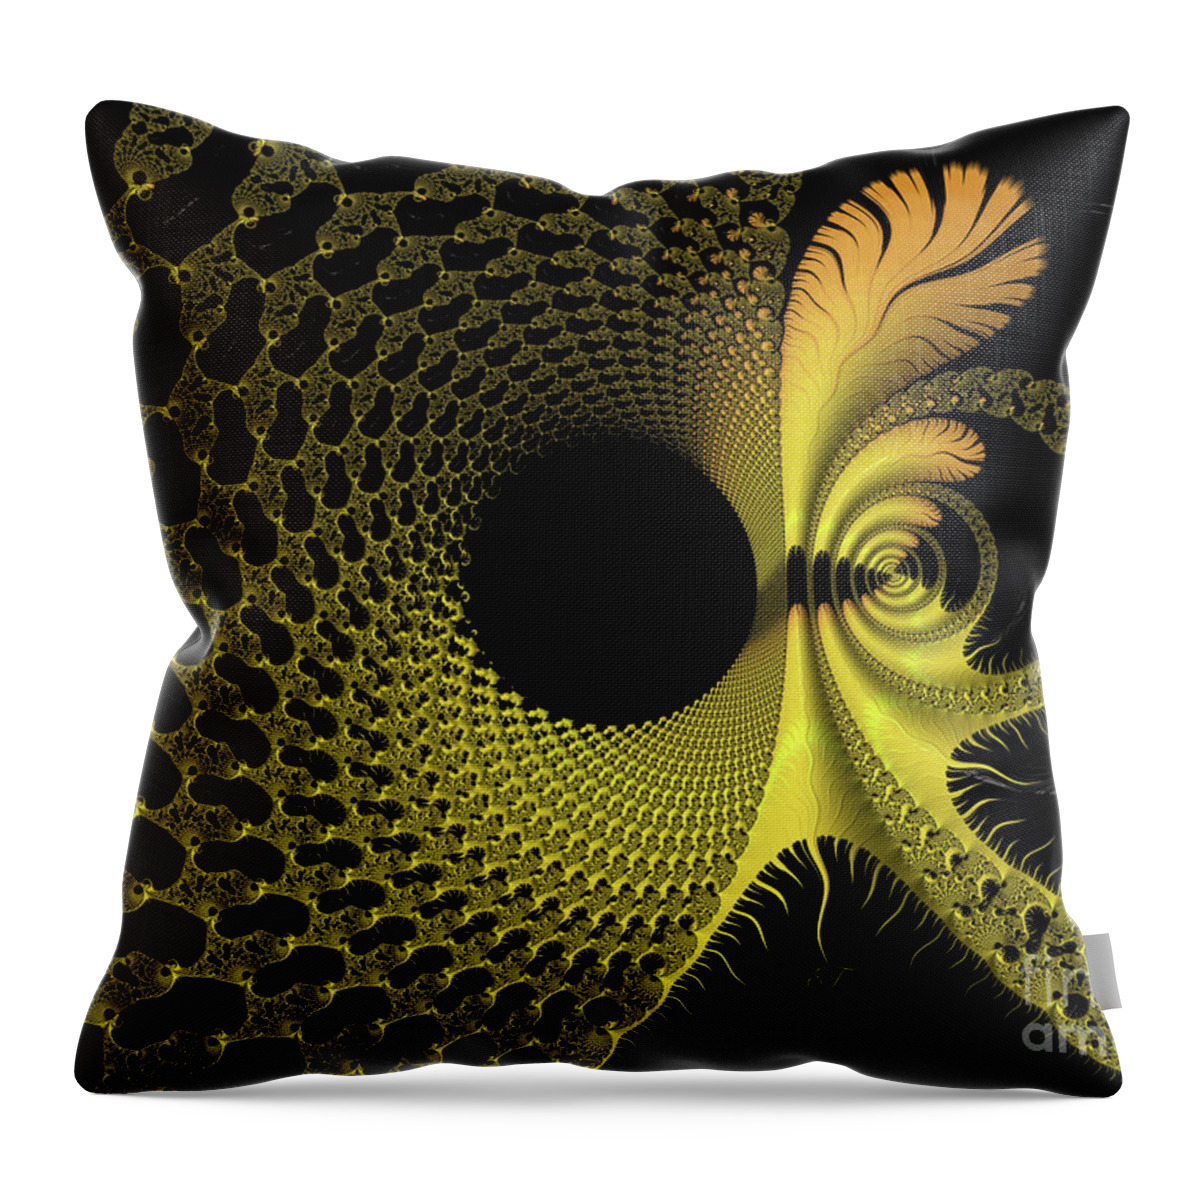 Fractal Throw Pillow featuring the digital art The Black Hole by Elaine Teague